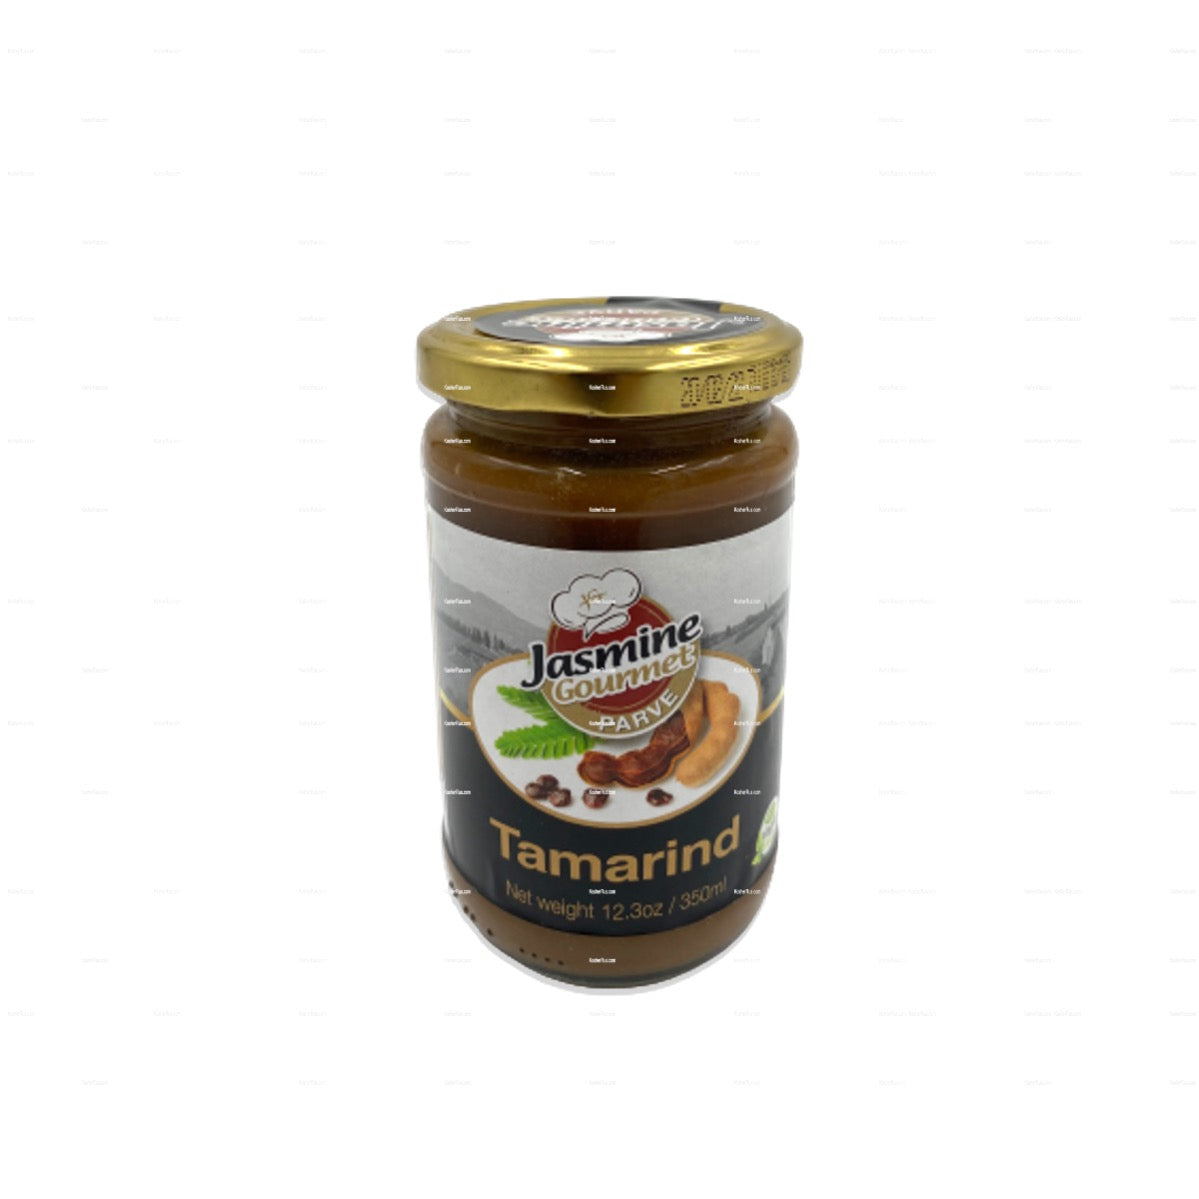 Jasmine Gourmet Tamarind Sauce 350ml